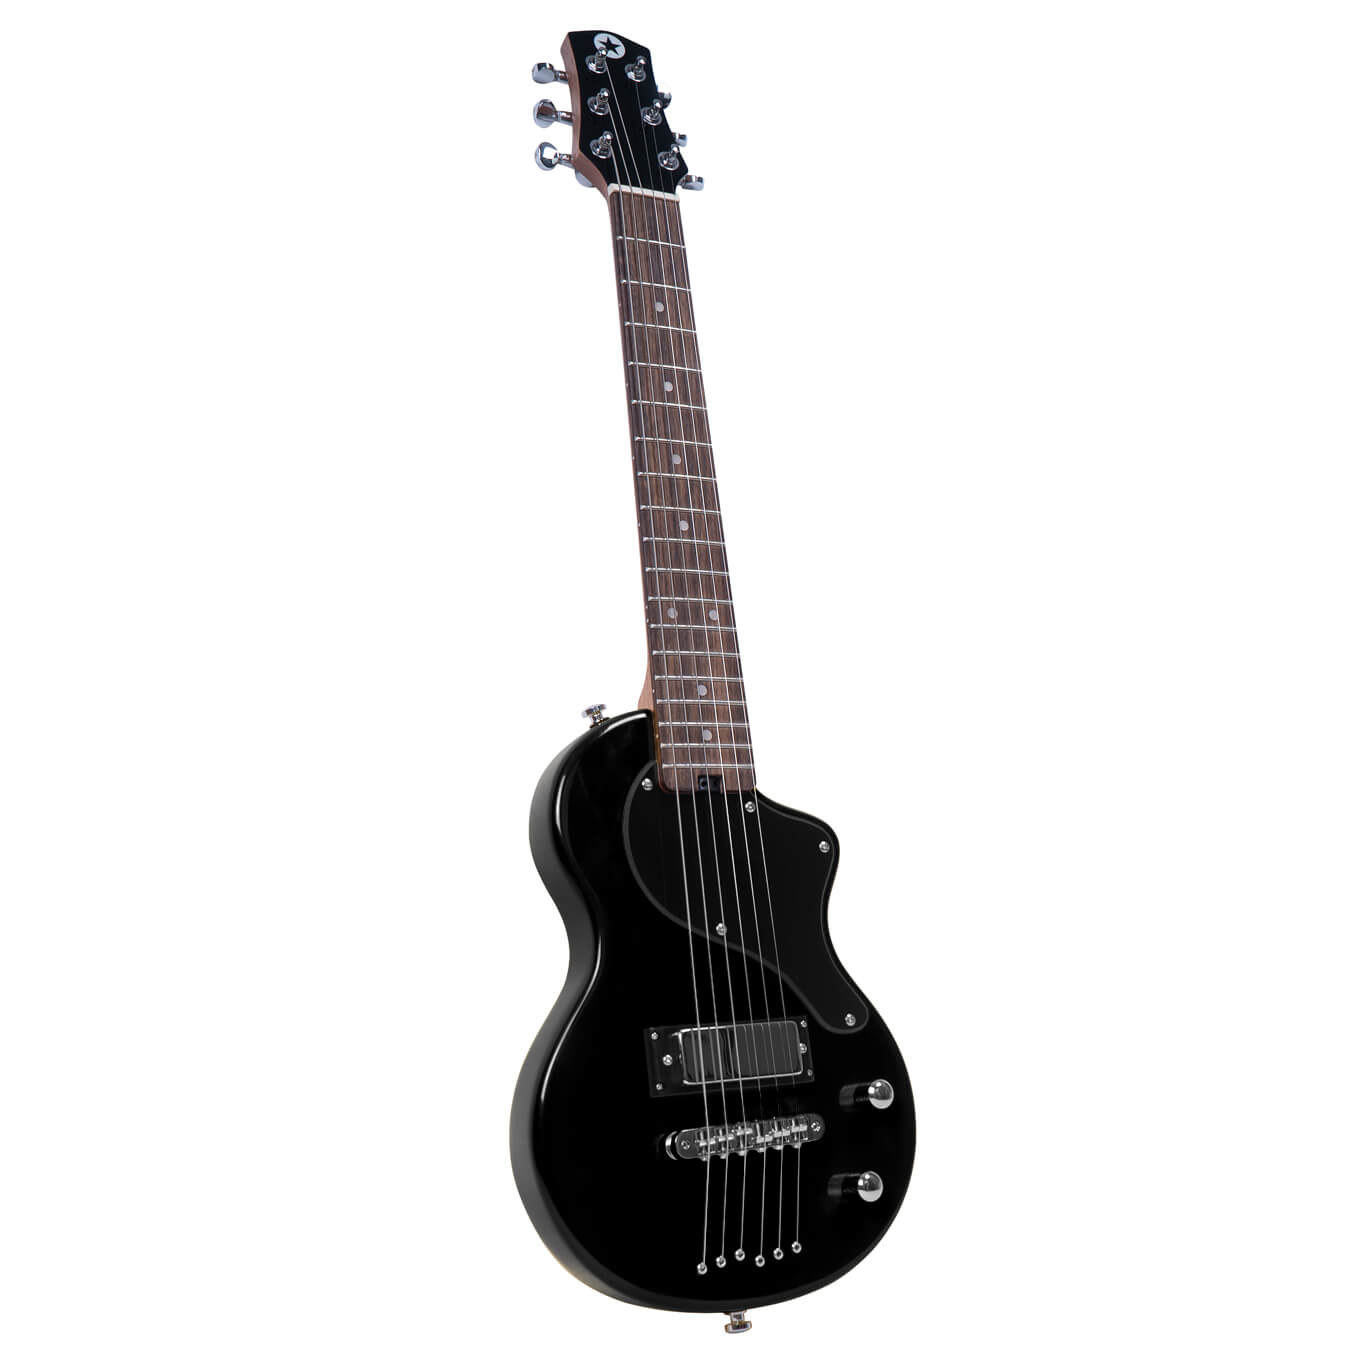 BLACKSTAR Carry-on ST Guitar Black